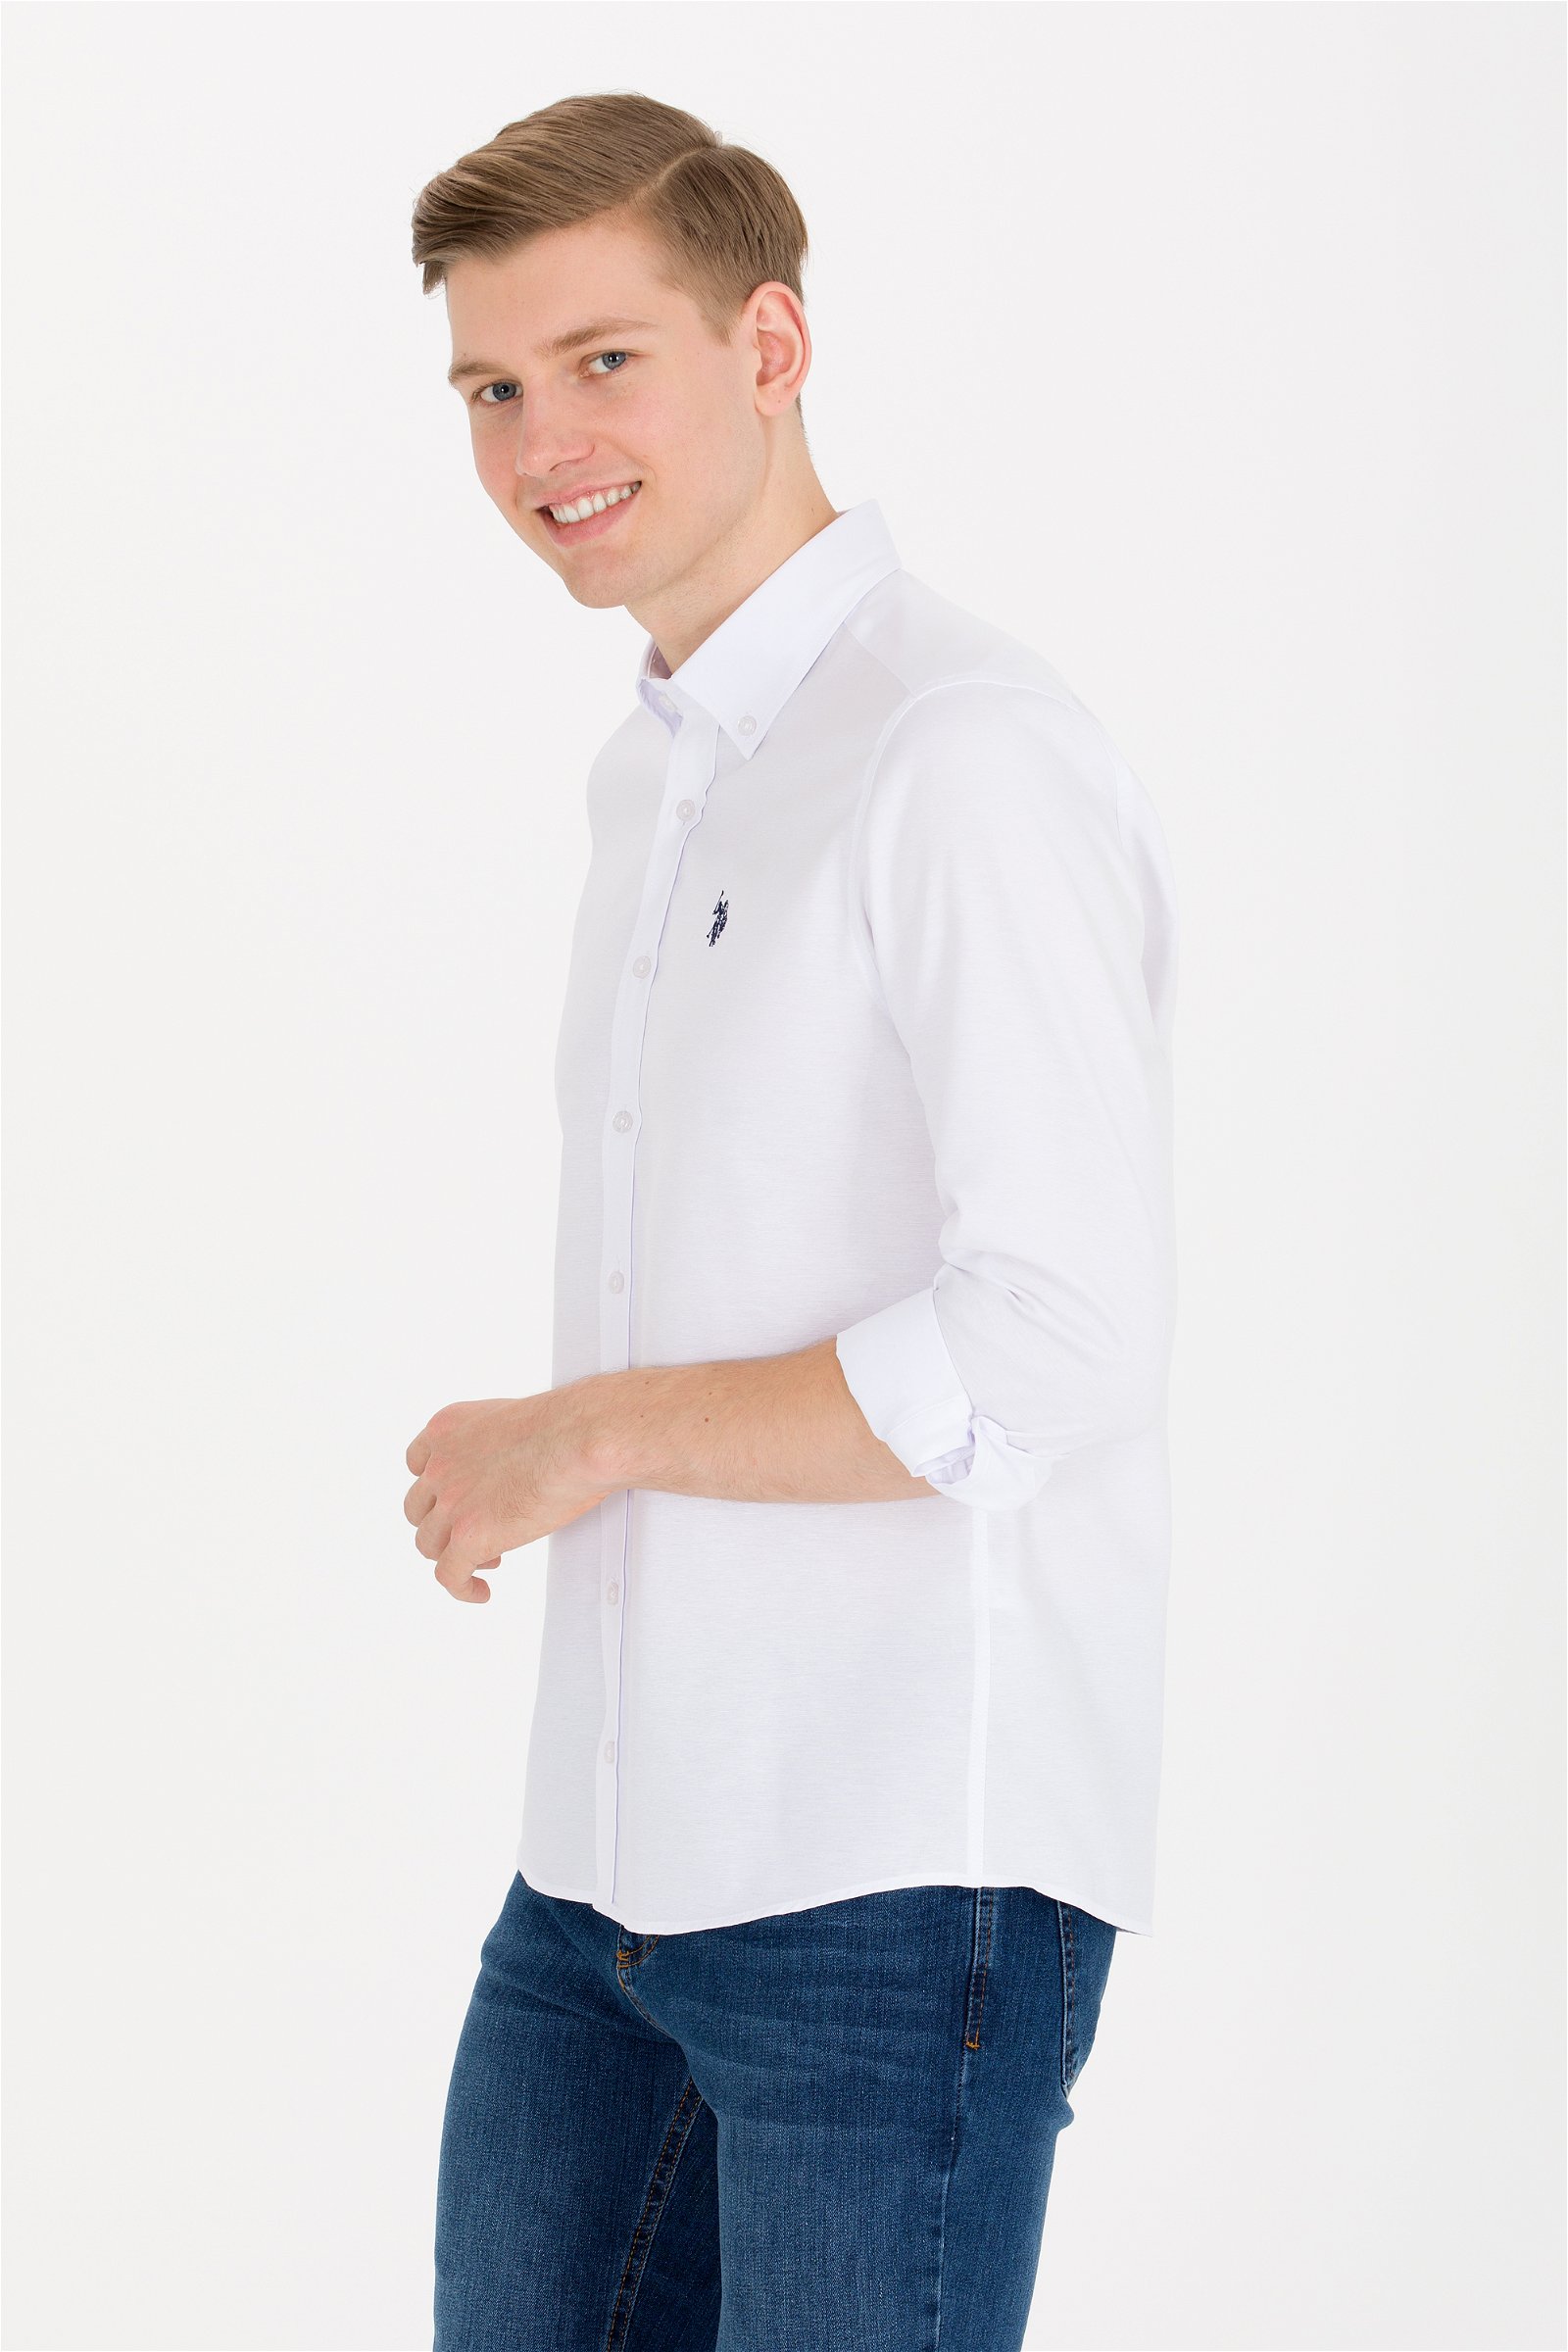 پیراهن  سفید  اندامی  مردانه یو اس پولو | US POLO ASSN